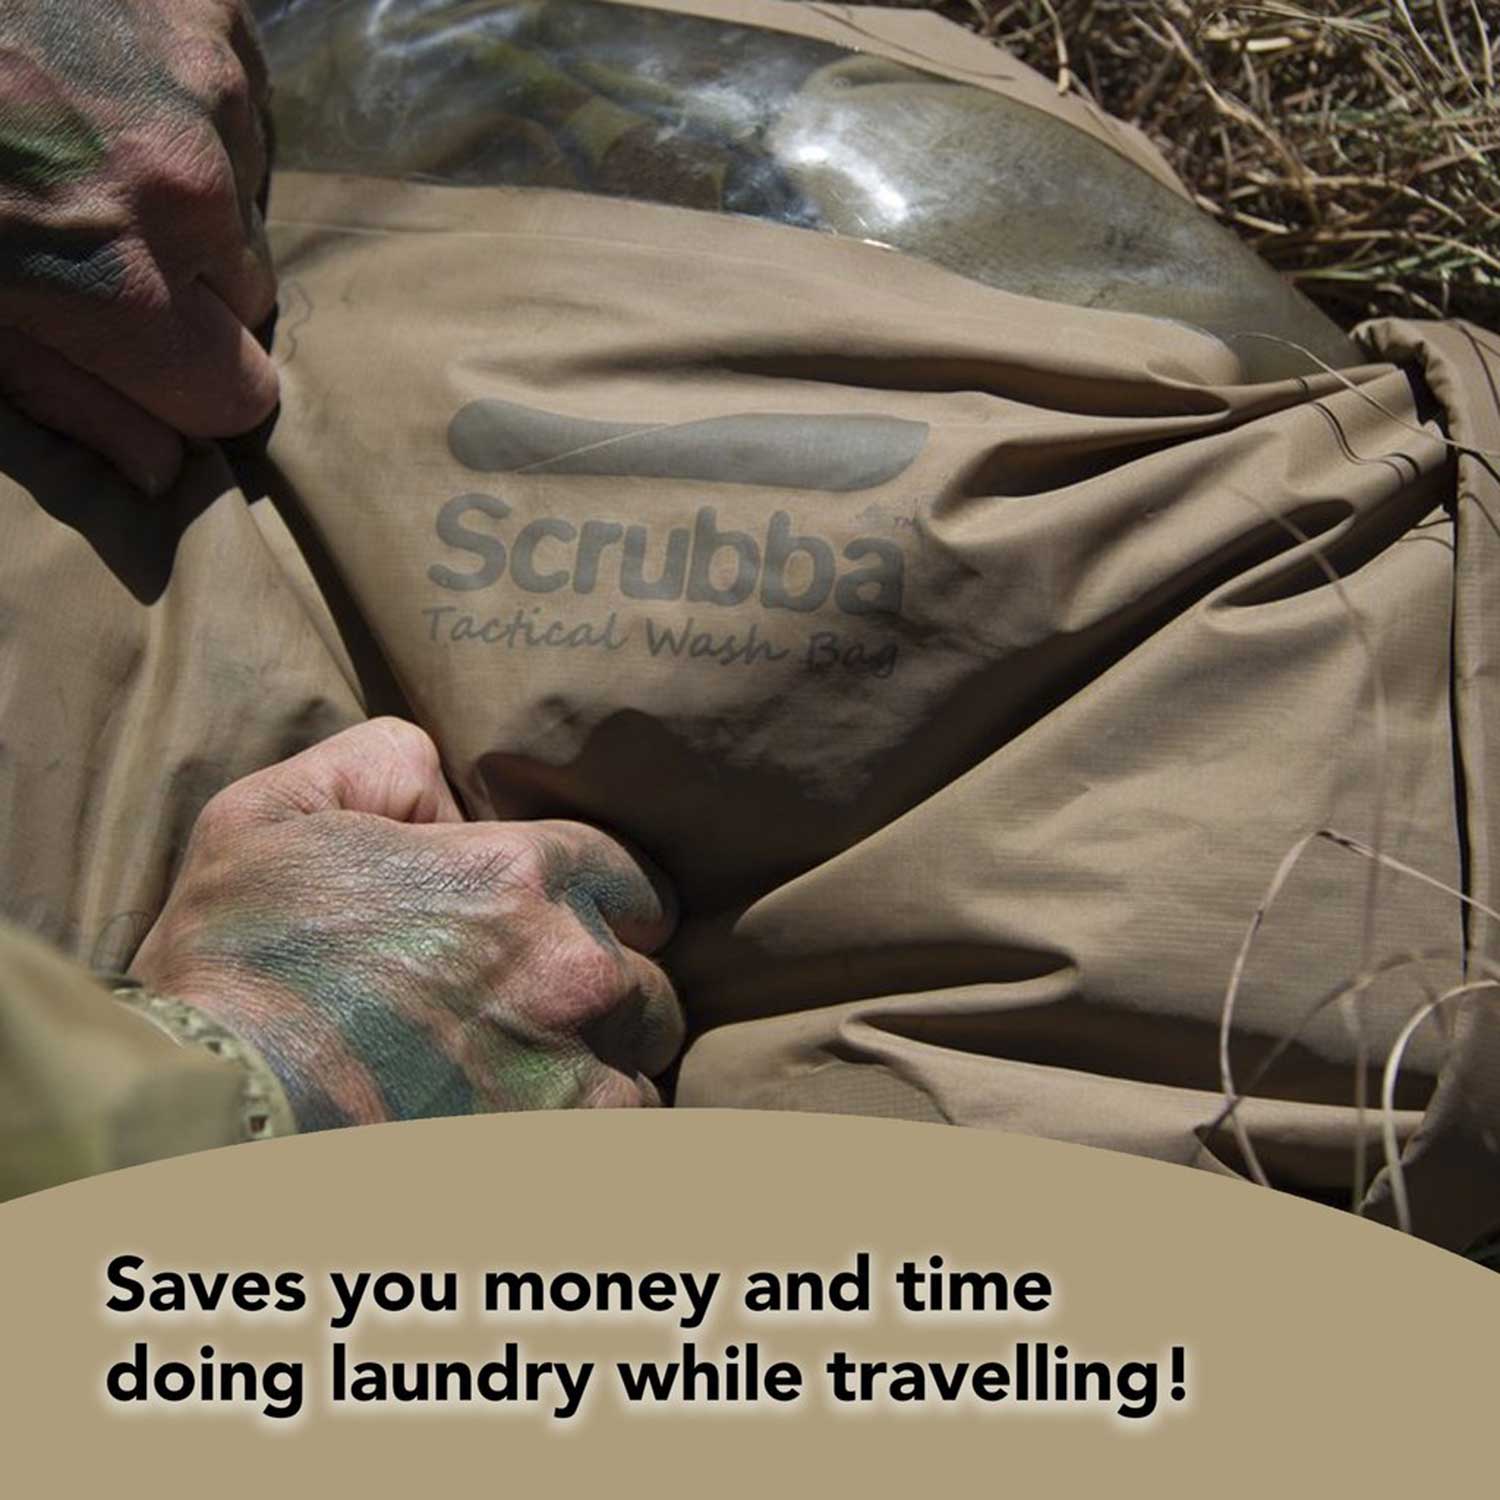 The Scrubba- Portable Washing Bag